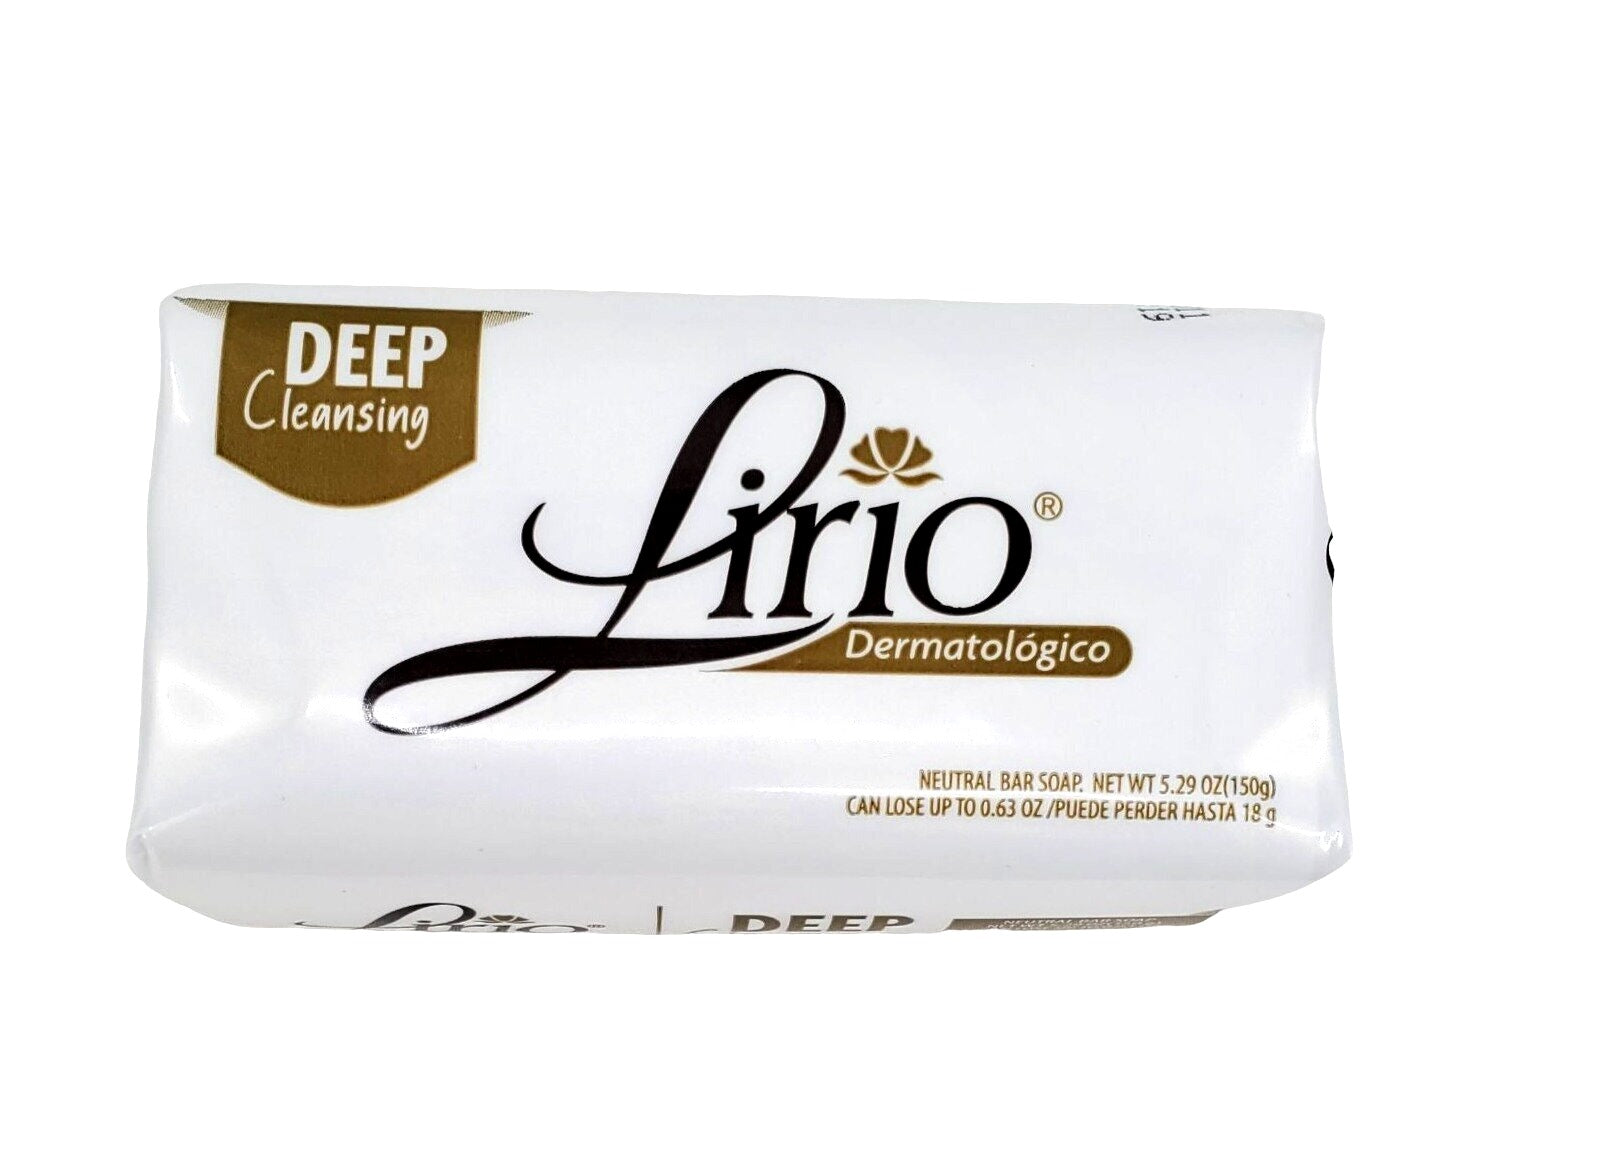 Lirio Dermatologic Cleansing Bath/Body soap- 5.29 oz (150g) - Jabon Lirio Neutral Bar Soap